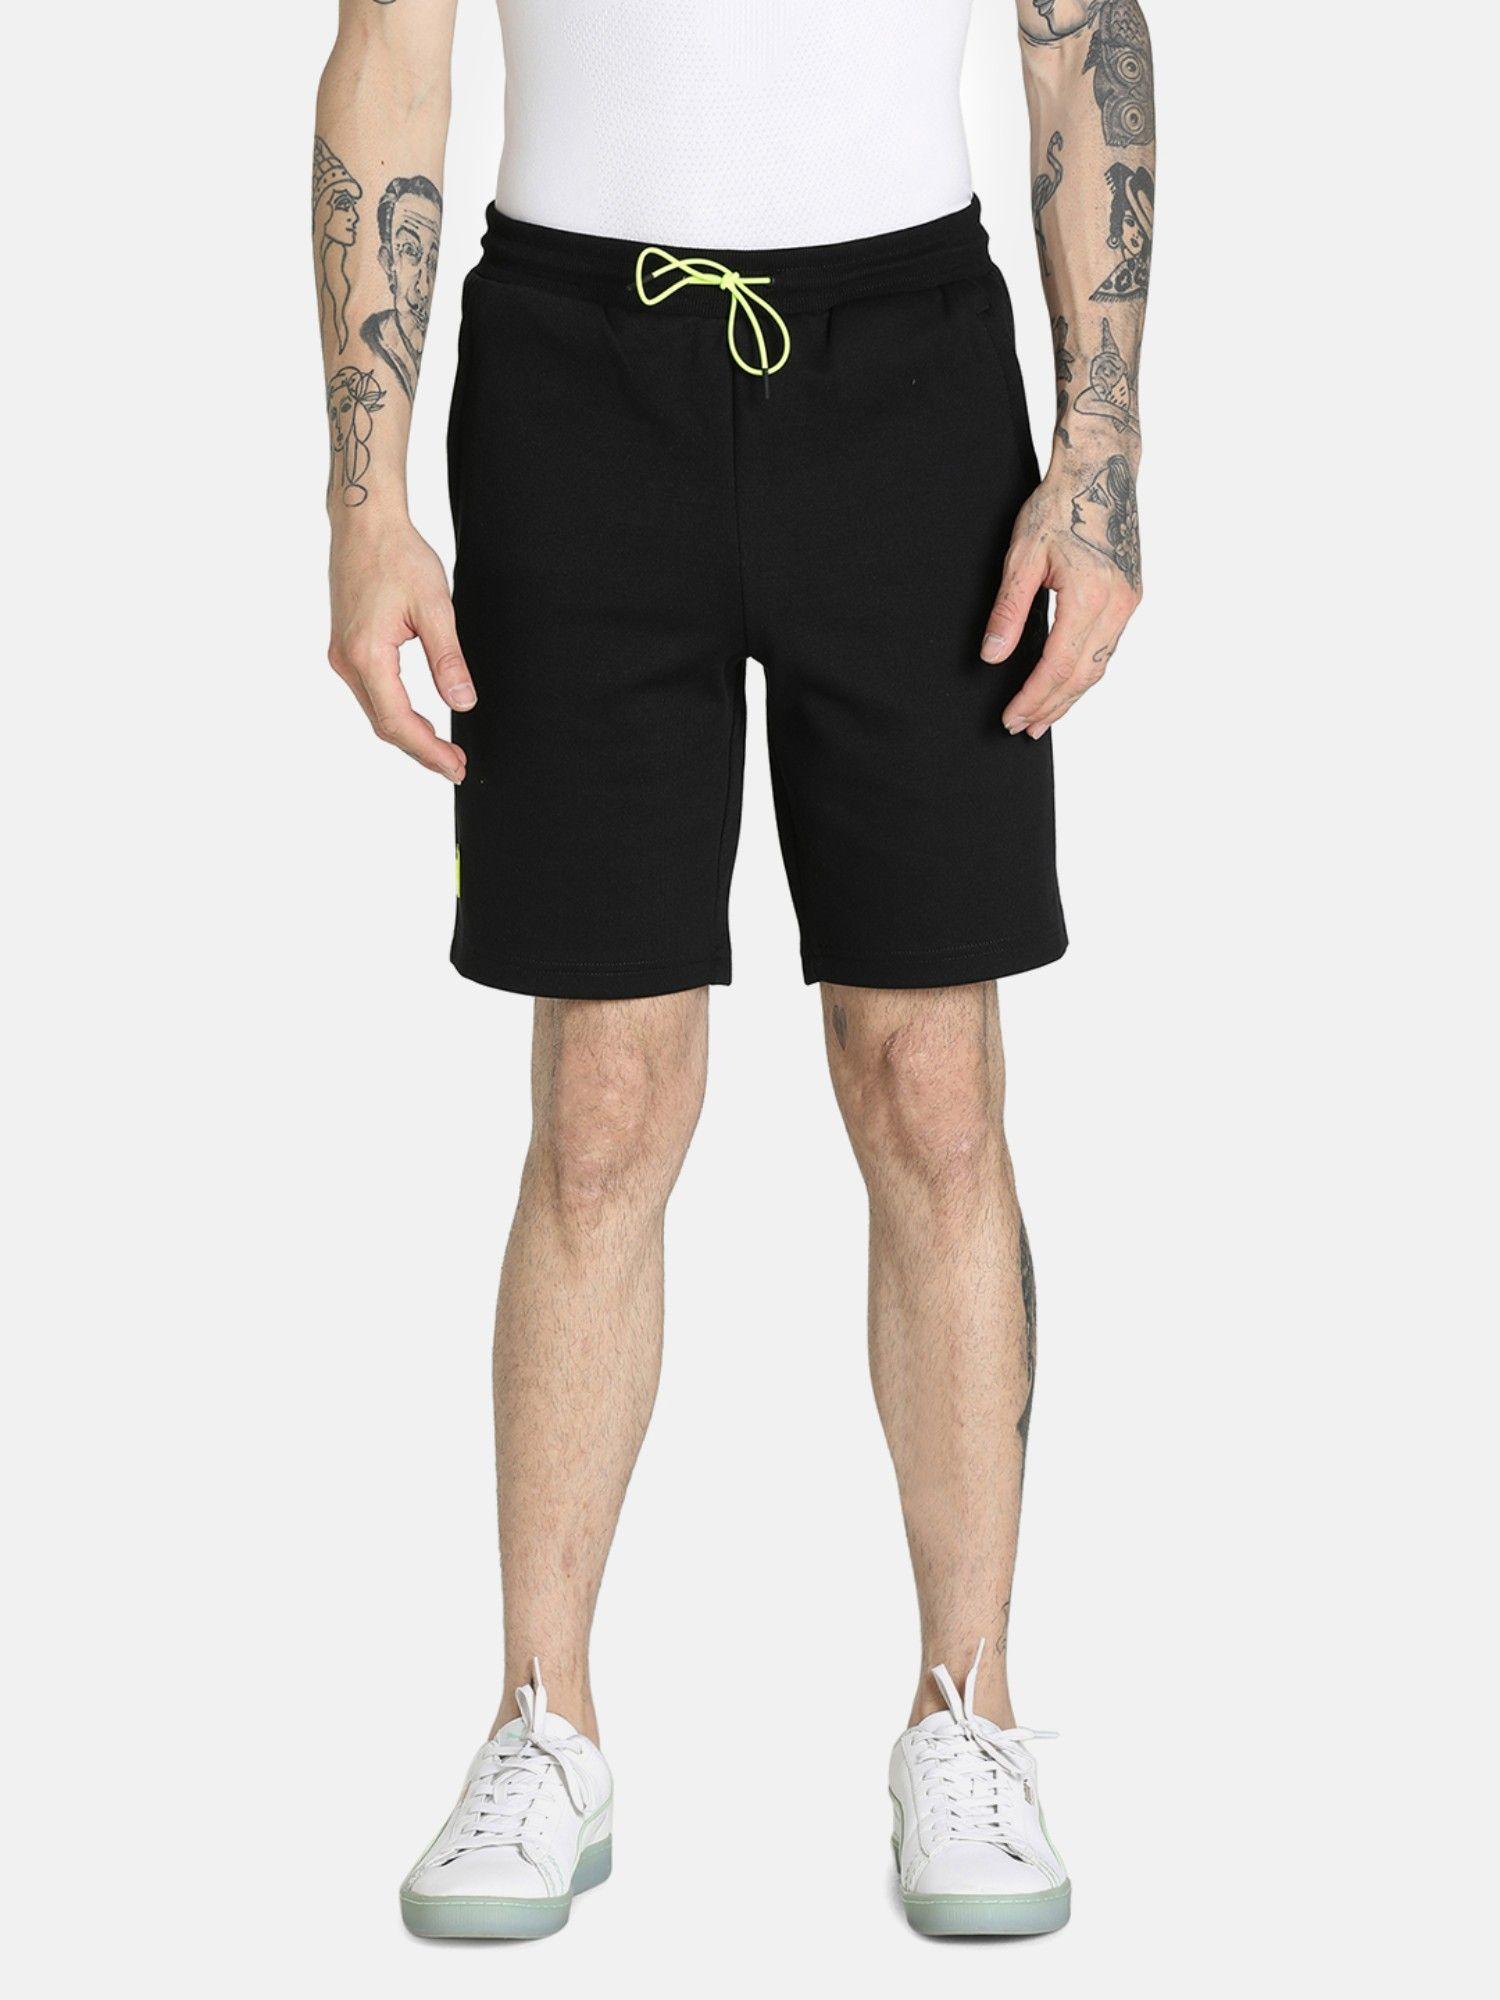 one8-virat-kohli-mens-black-shorts